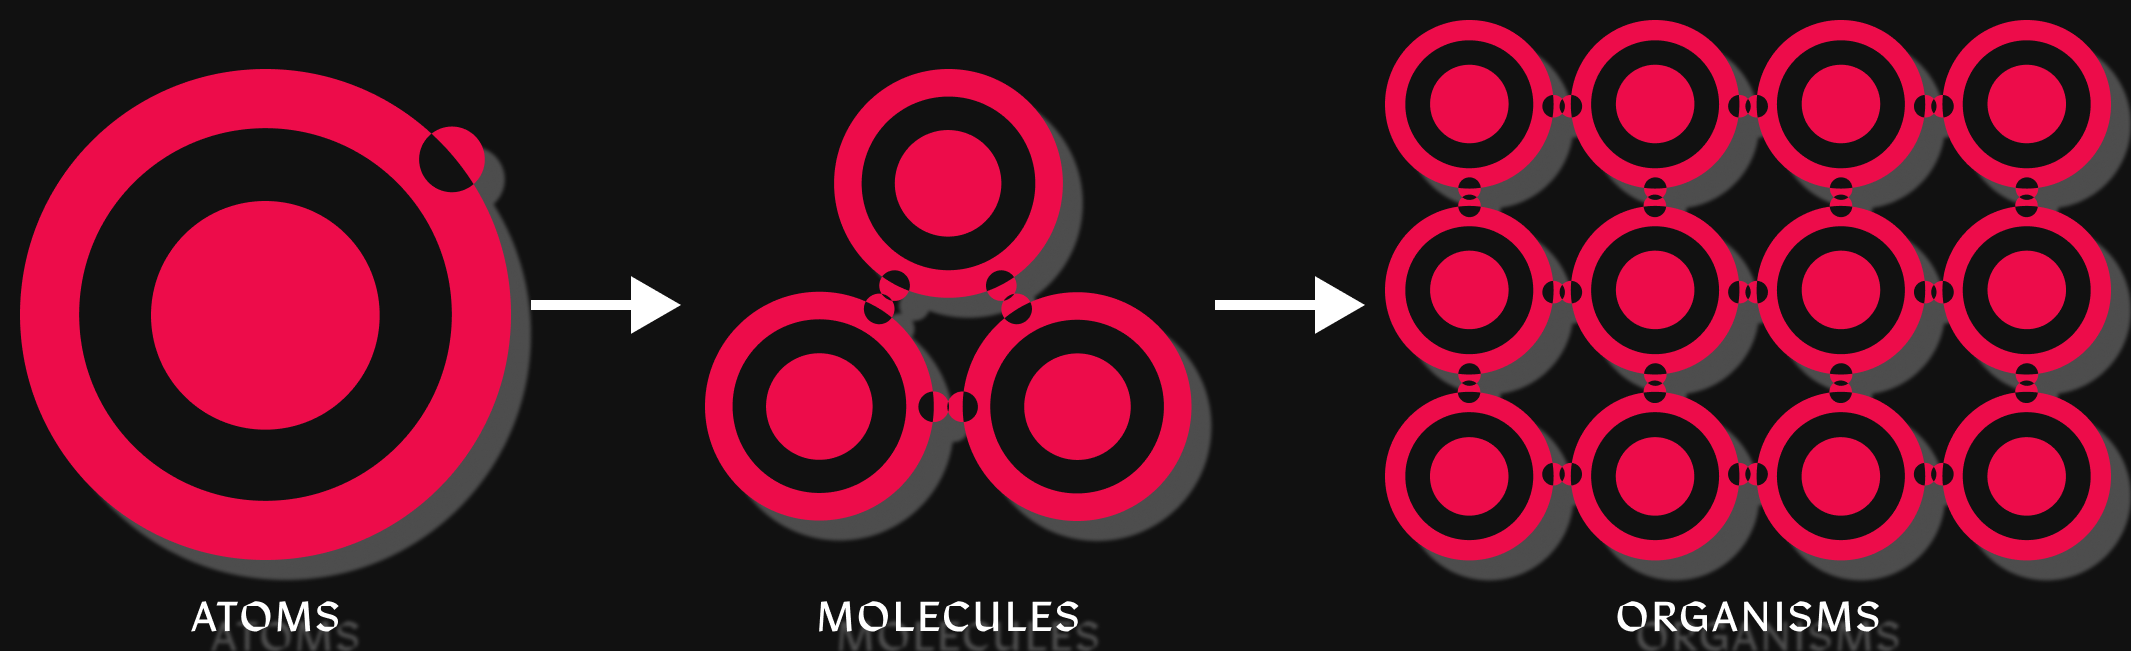 atoms-molecules-organisms